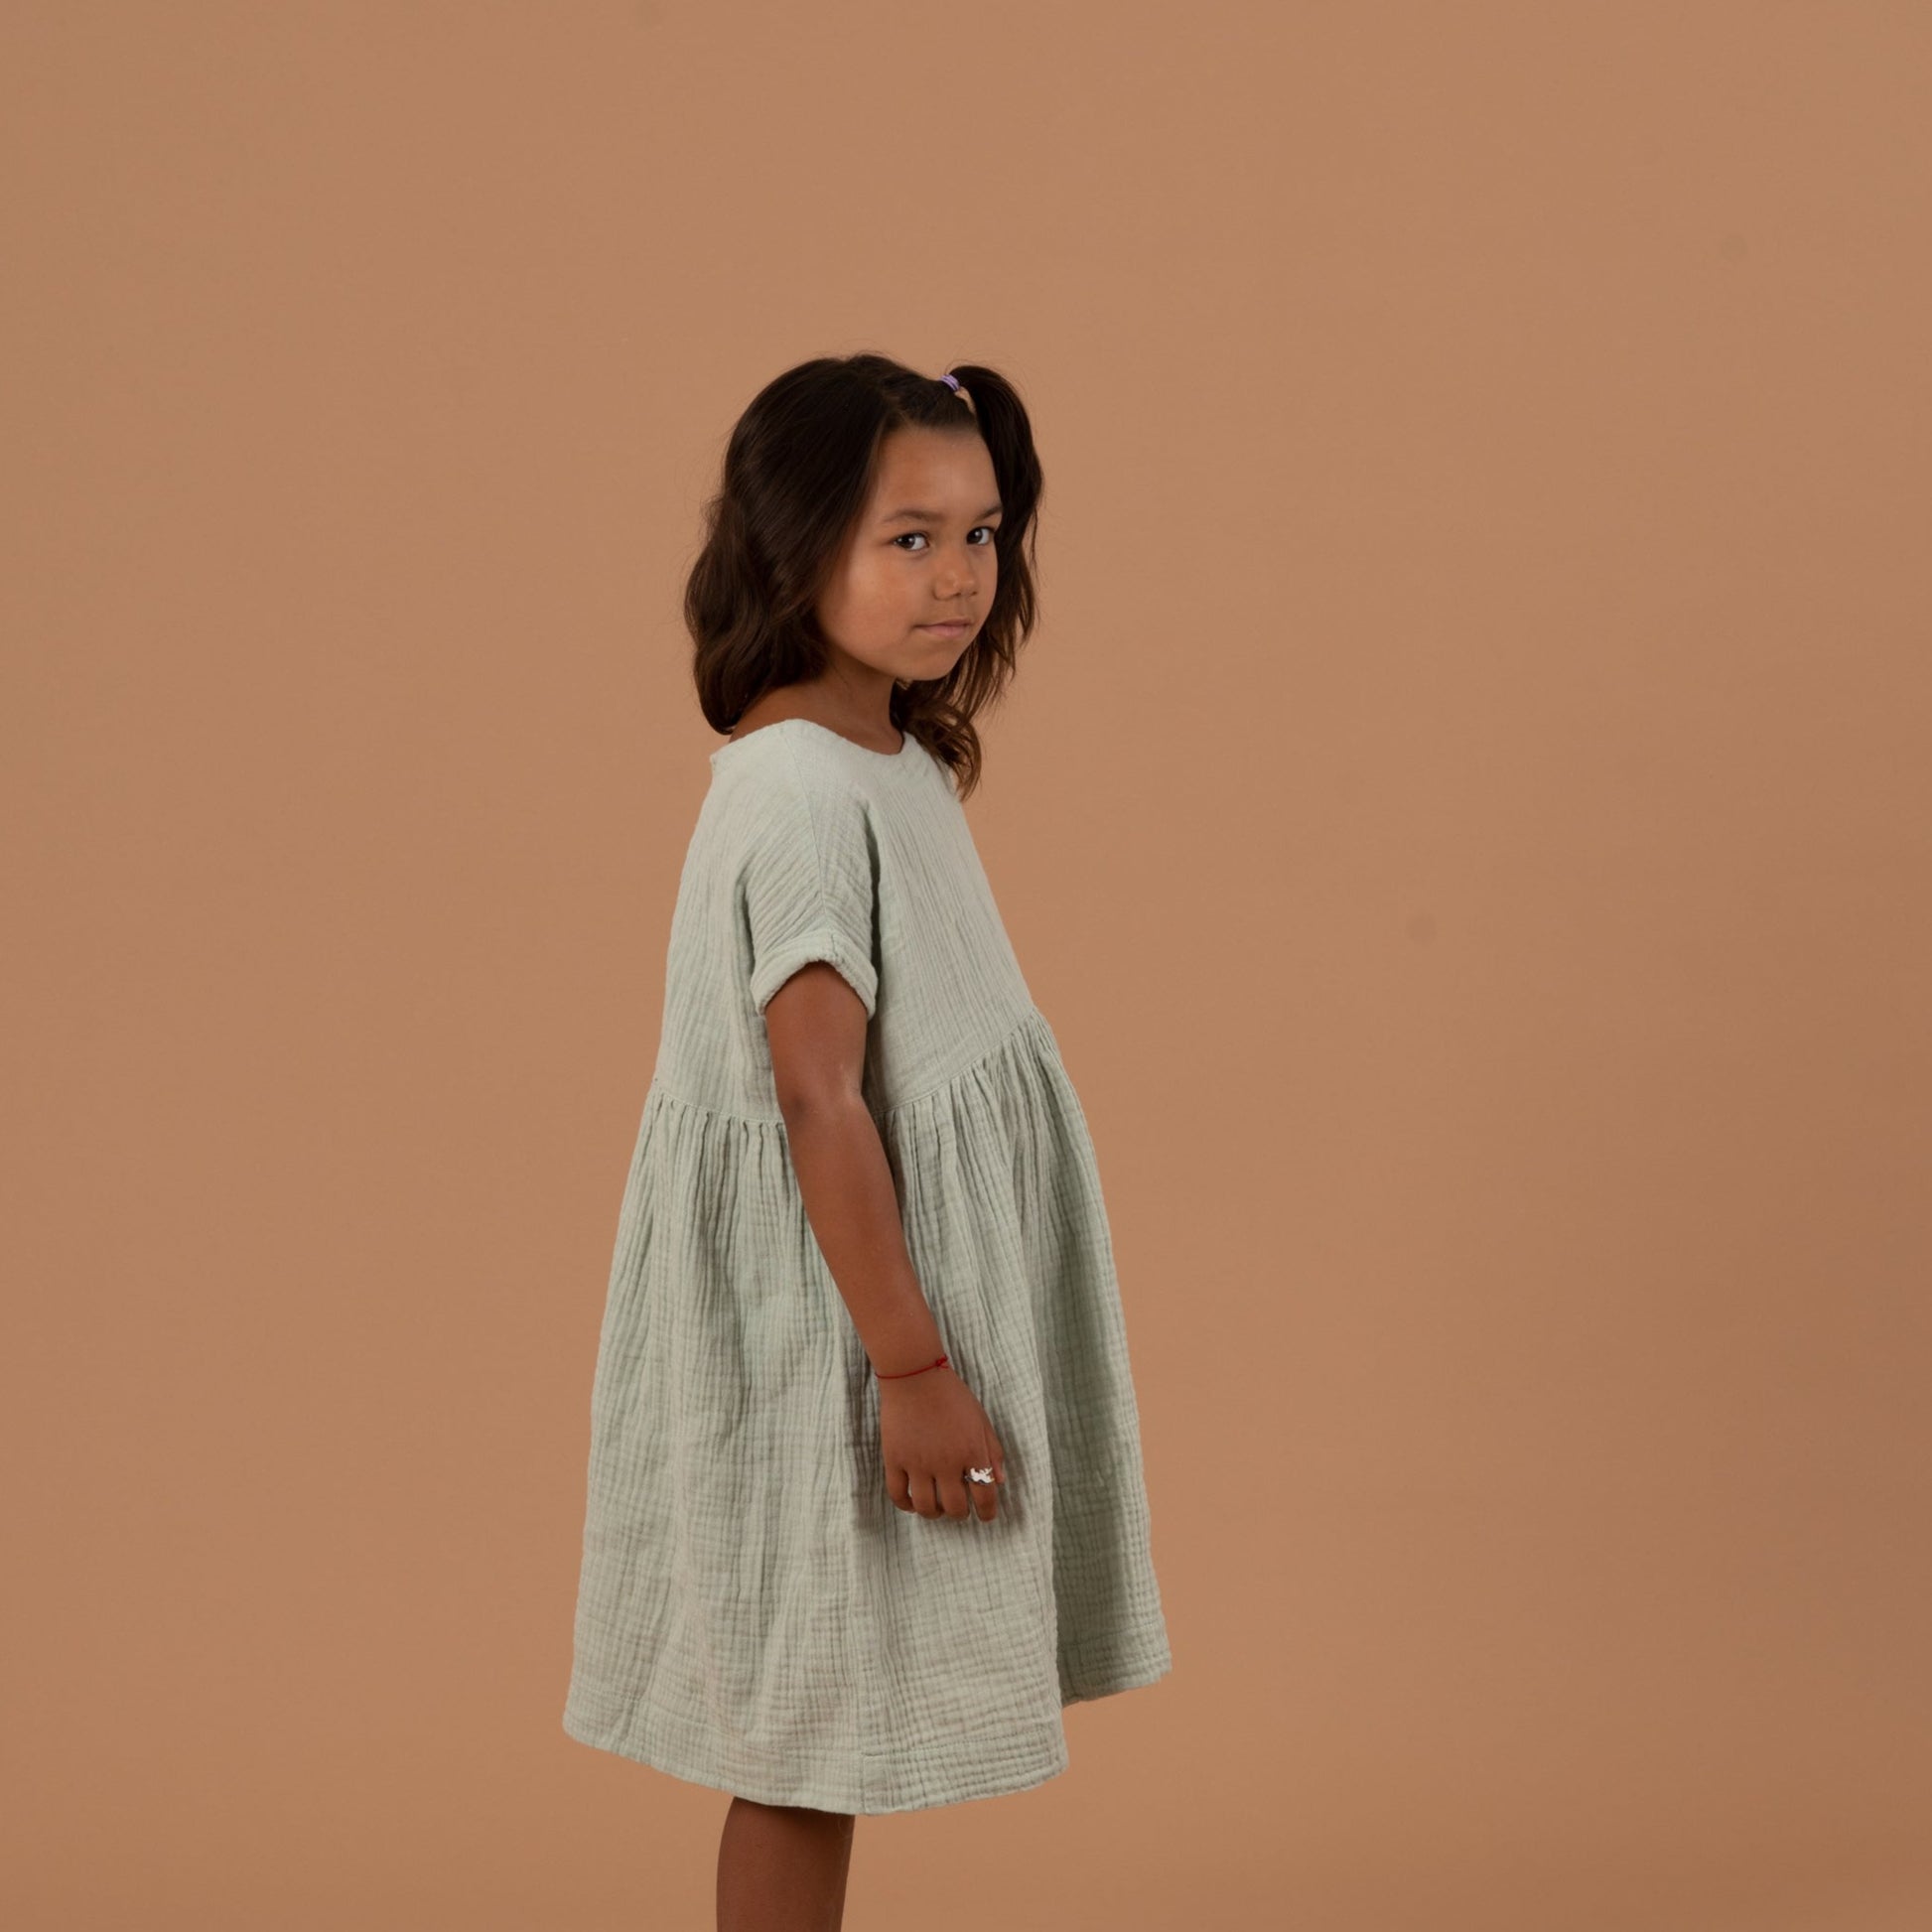 MIA Kinderkleid Musselin Mint Seitenansicht rechts, Urheber: Mini & Eve